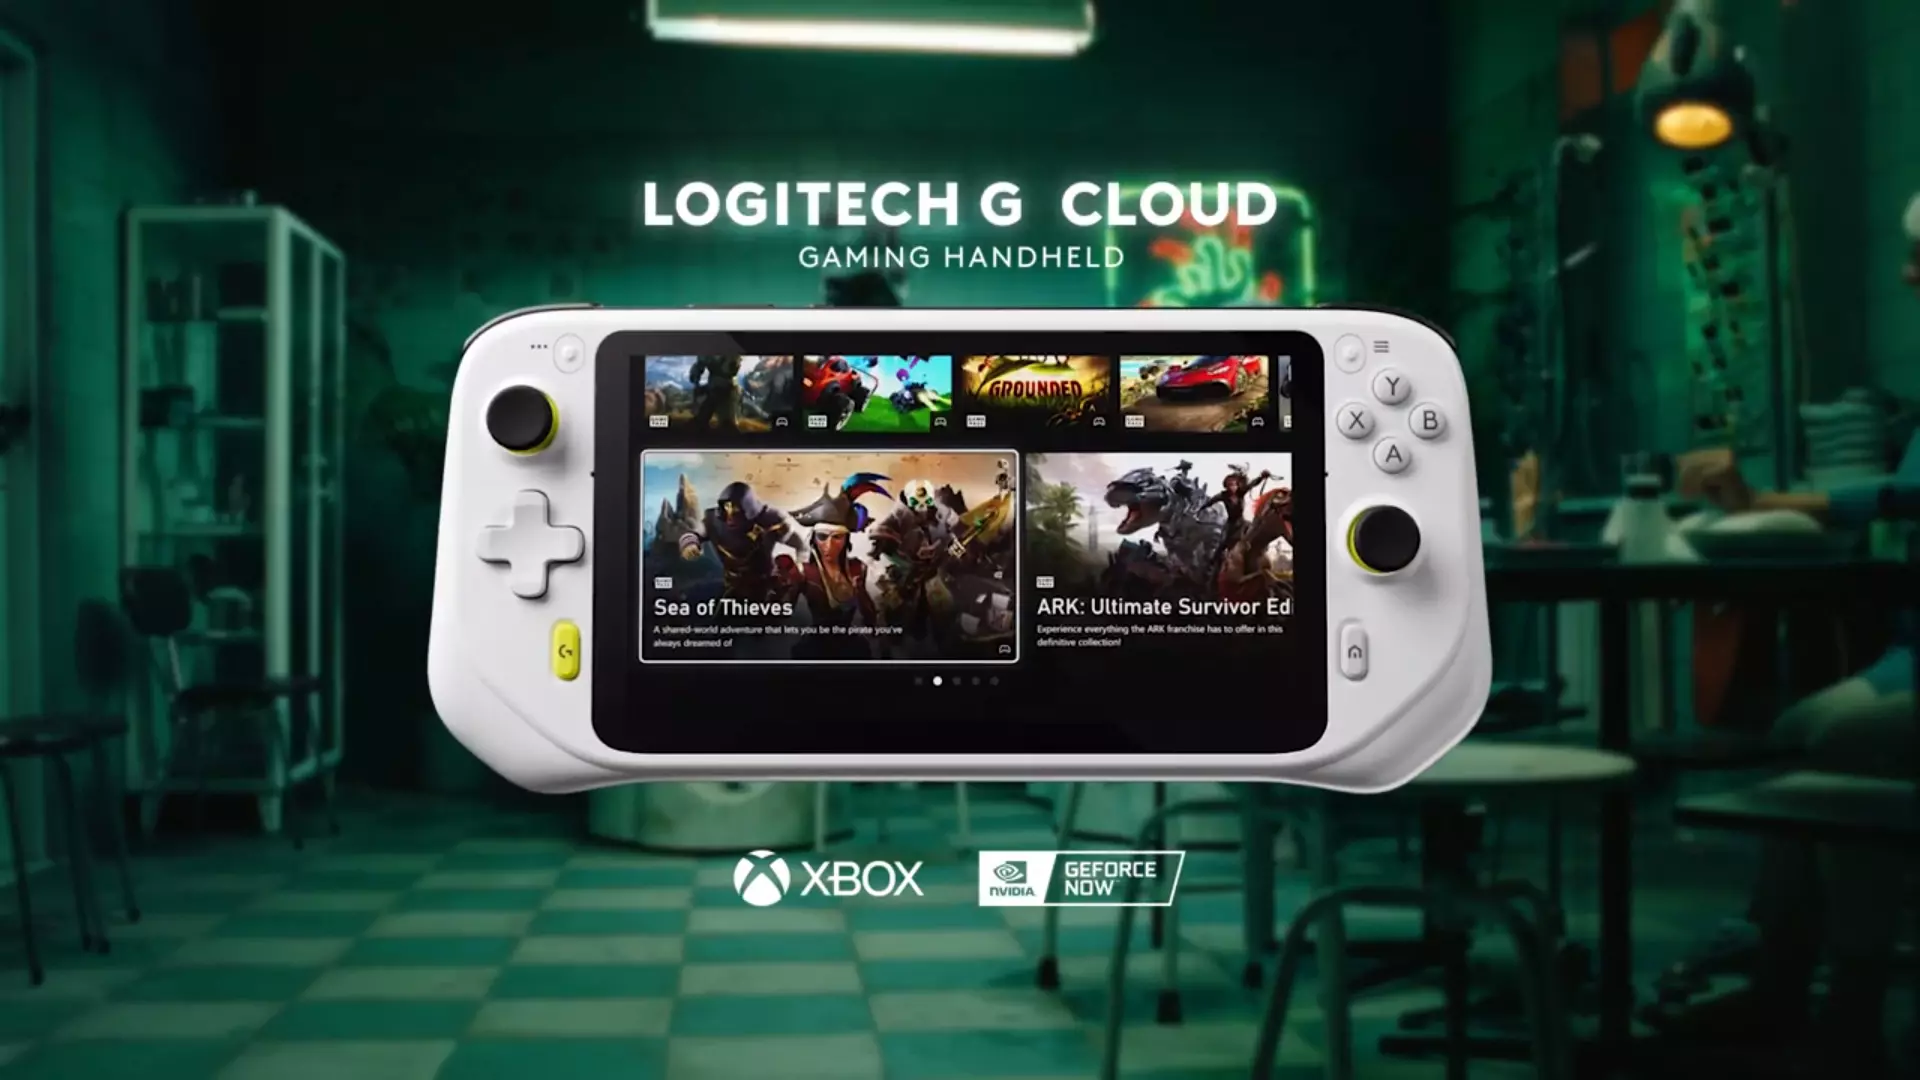 Logitech G כף יד למשחקי ענן